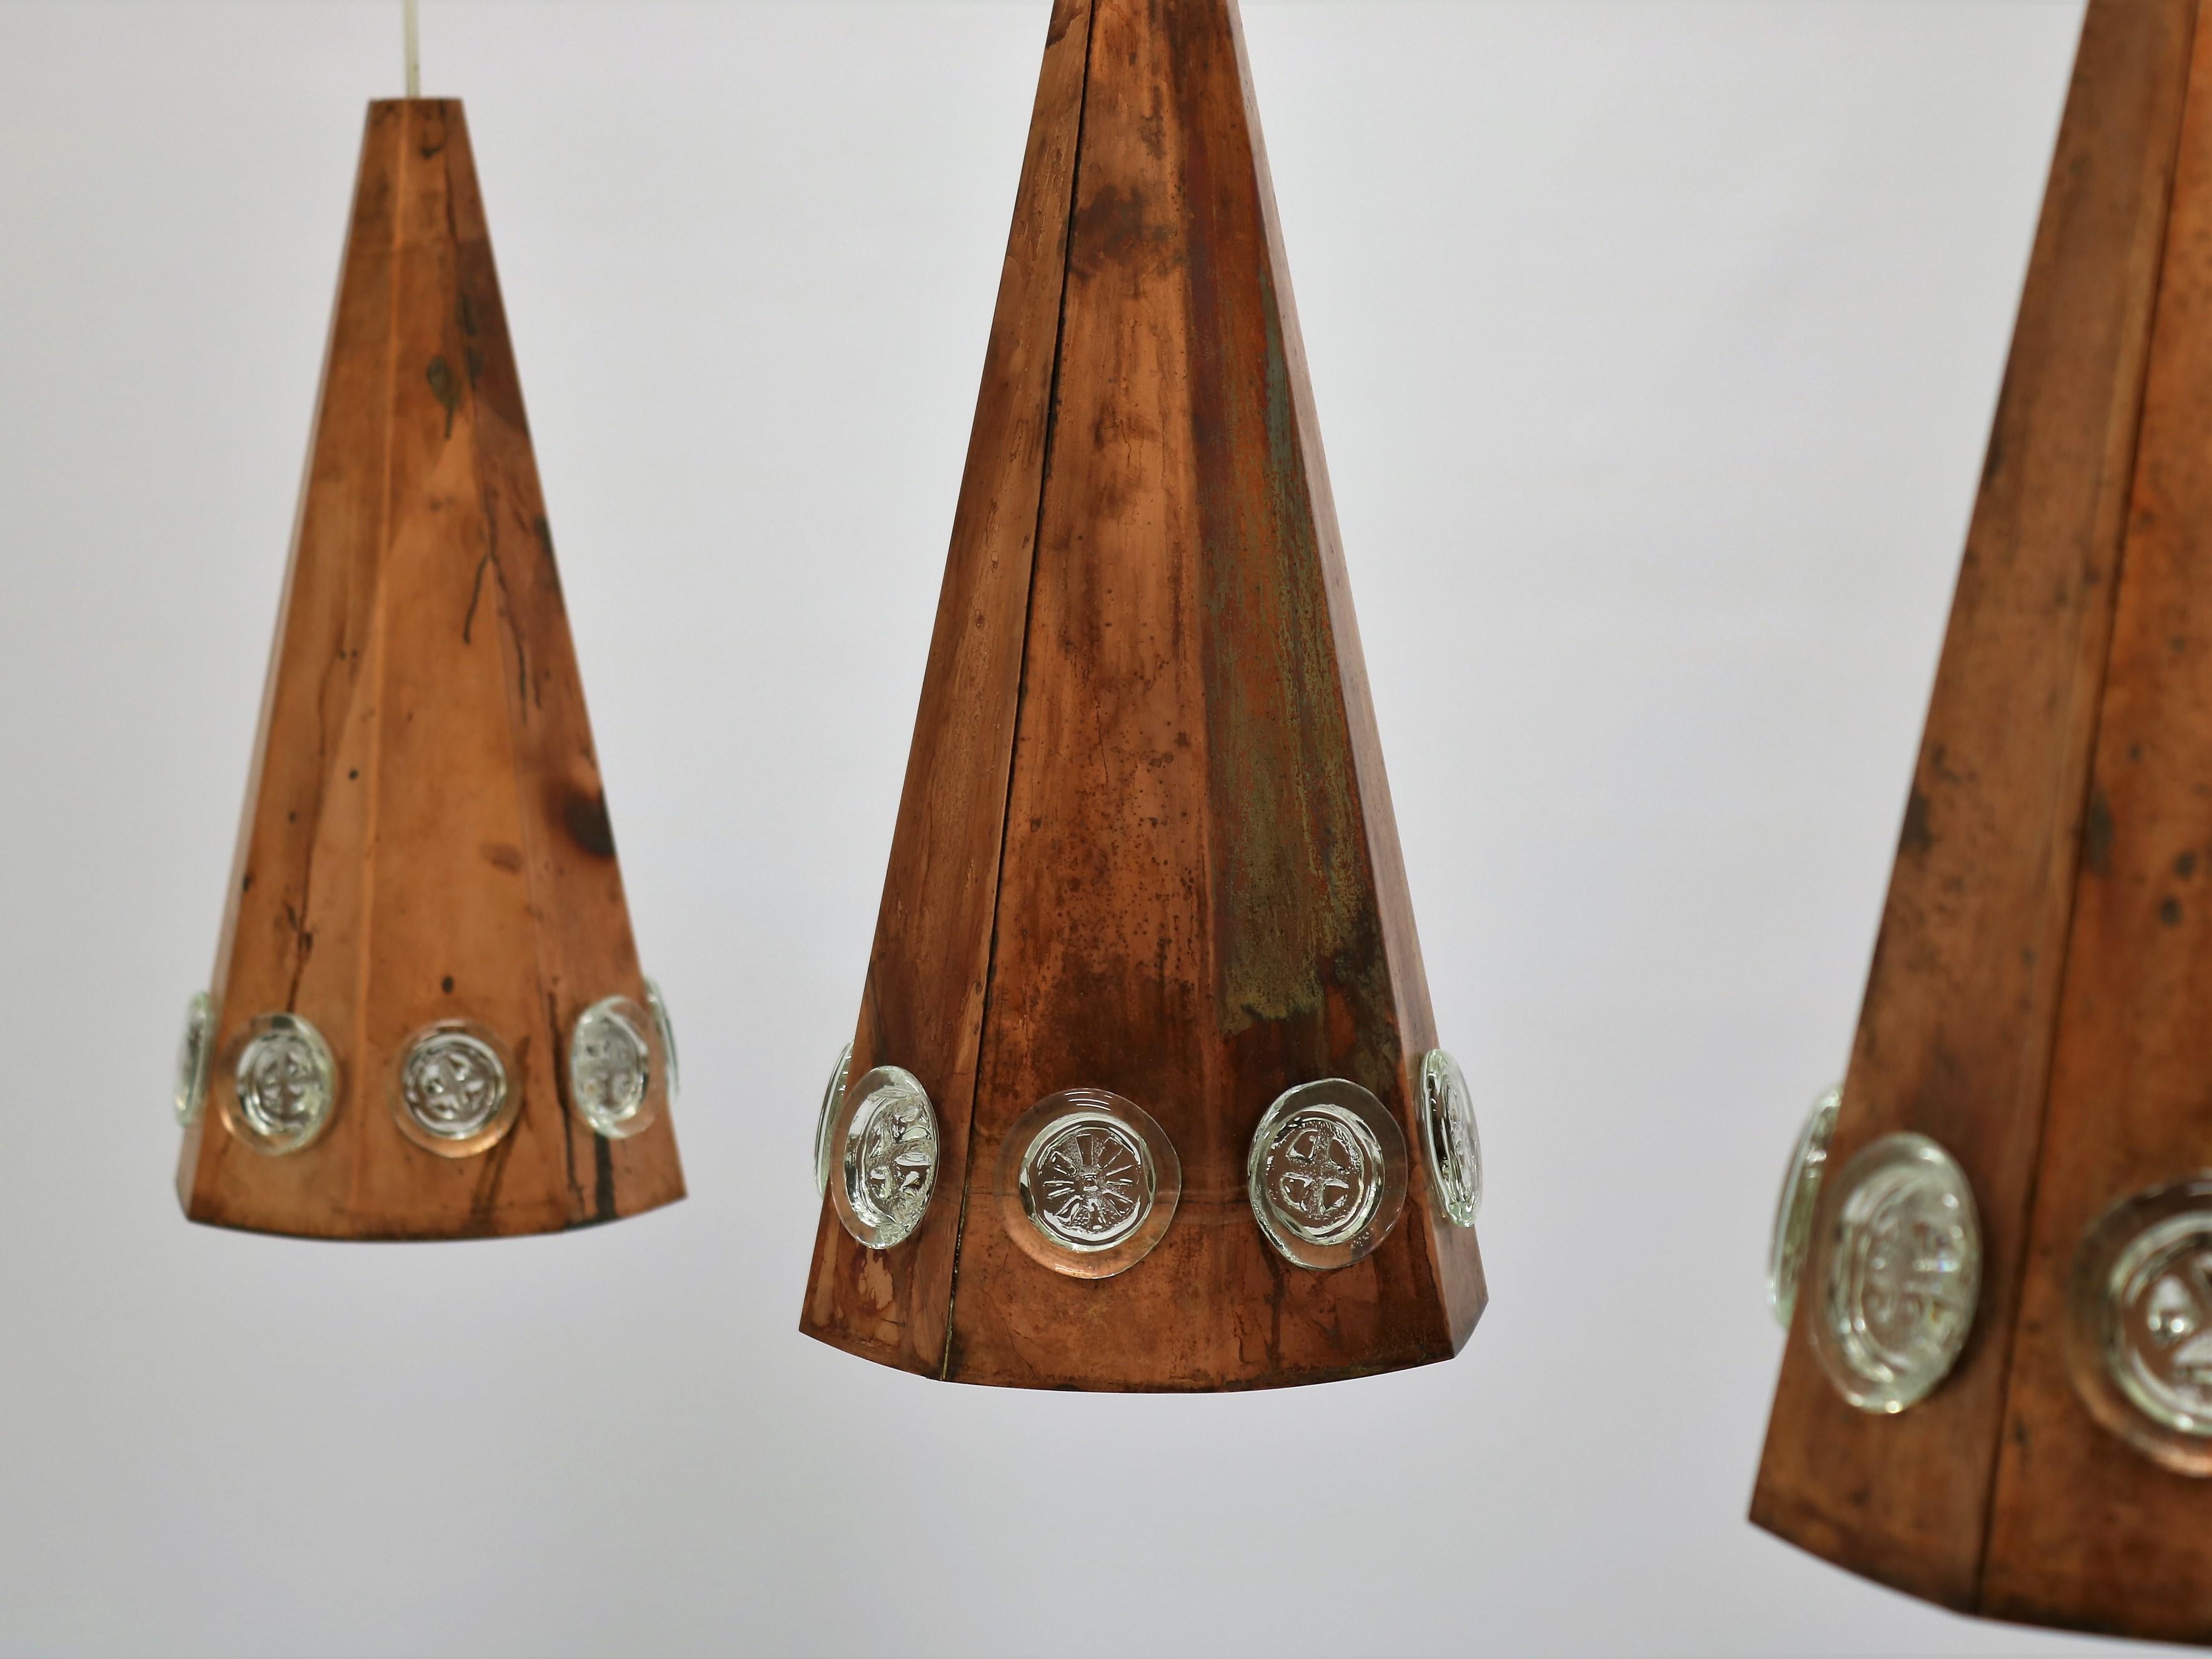 Scandinavian Modern Set of 3 Copper Pendants by Danish Designer Svend Aage Holm Sorensen